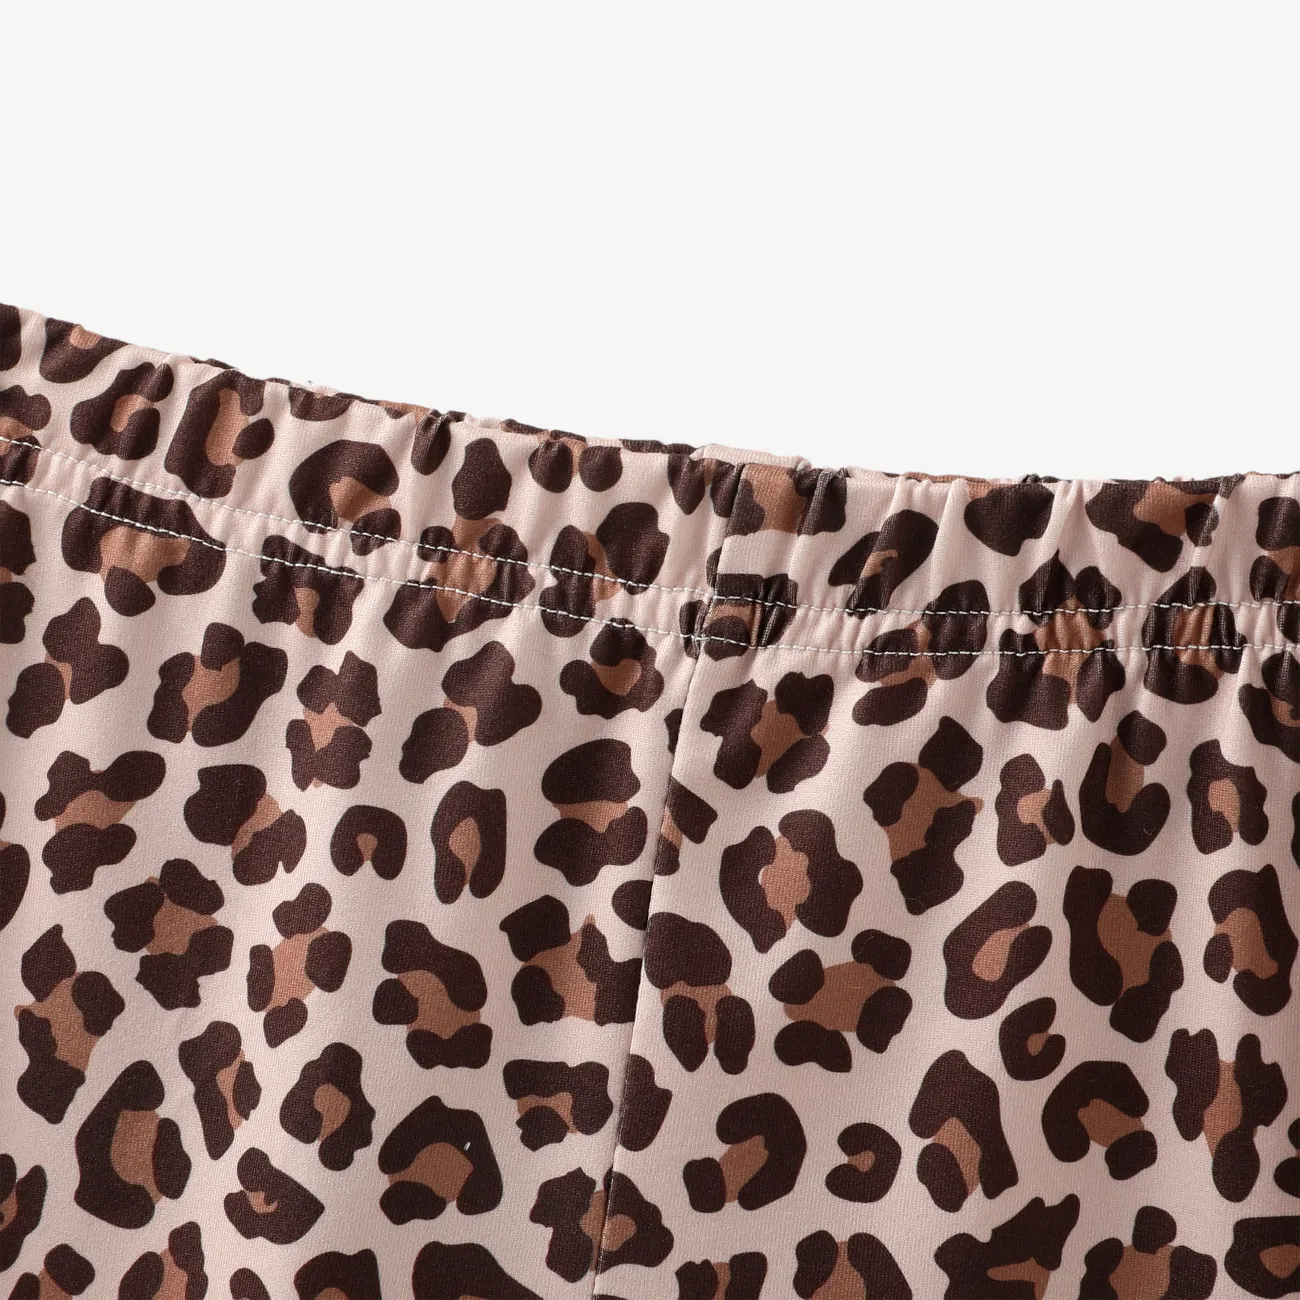 2PCS Toddler Girl Childlike Animal Pattern Leopard Grain Top/ Pant Set Apricot big image 1